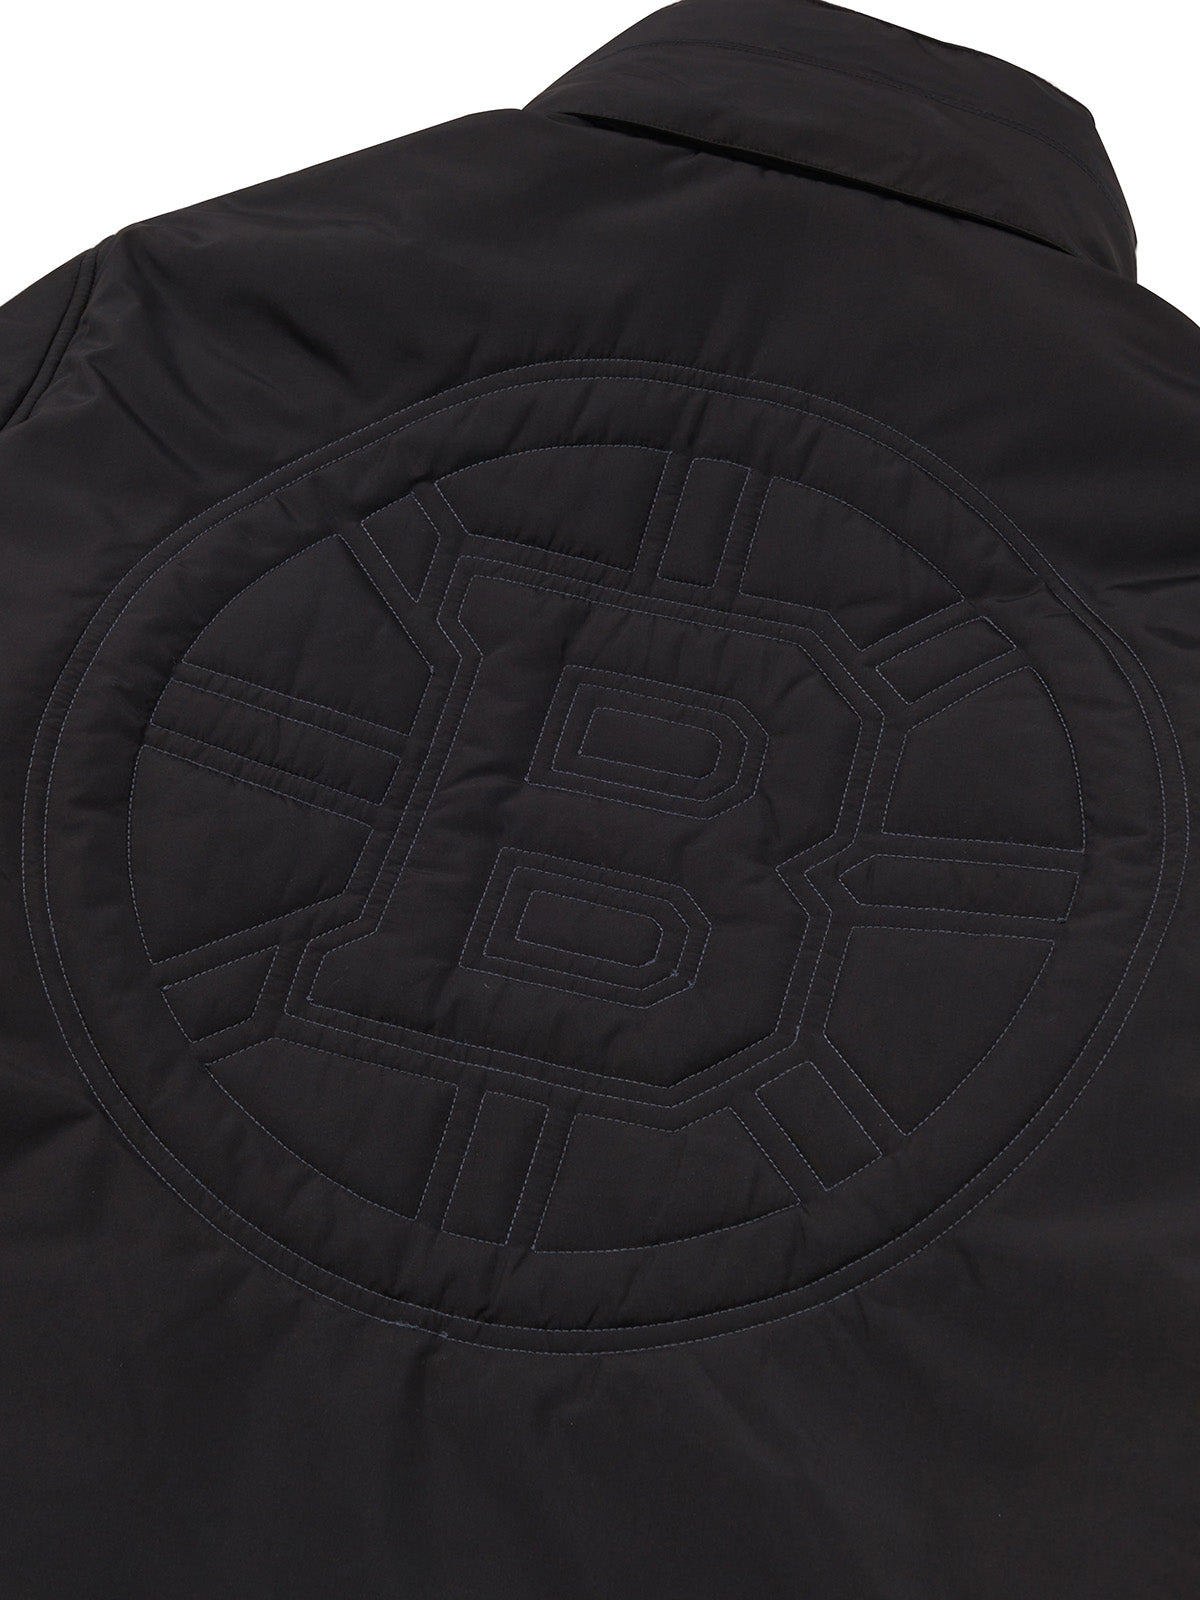 Boston Bruins Coach's Jacket